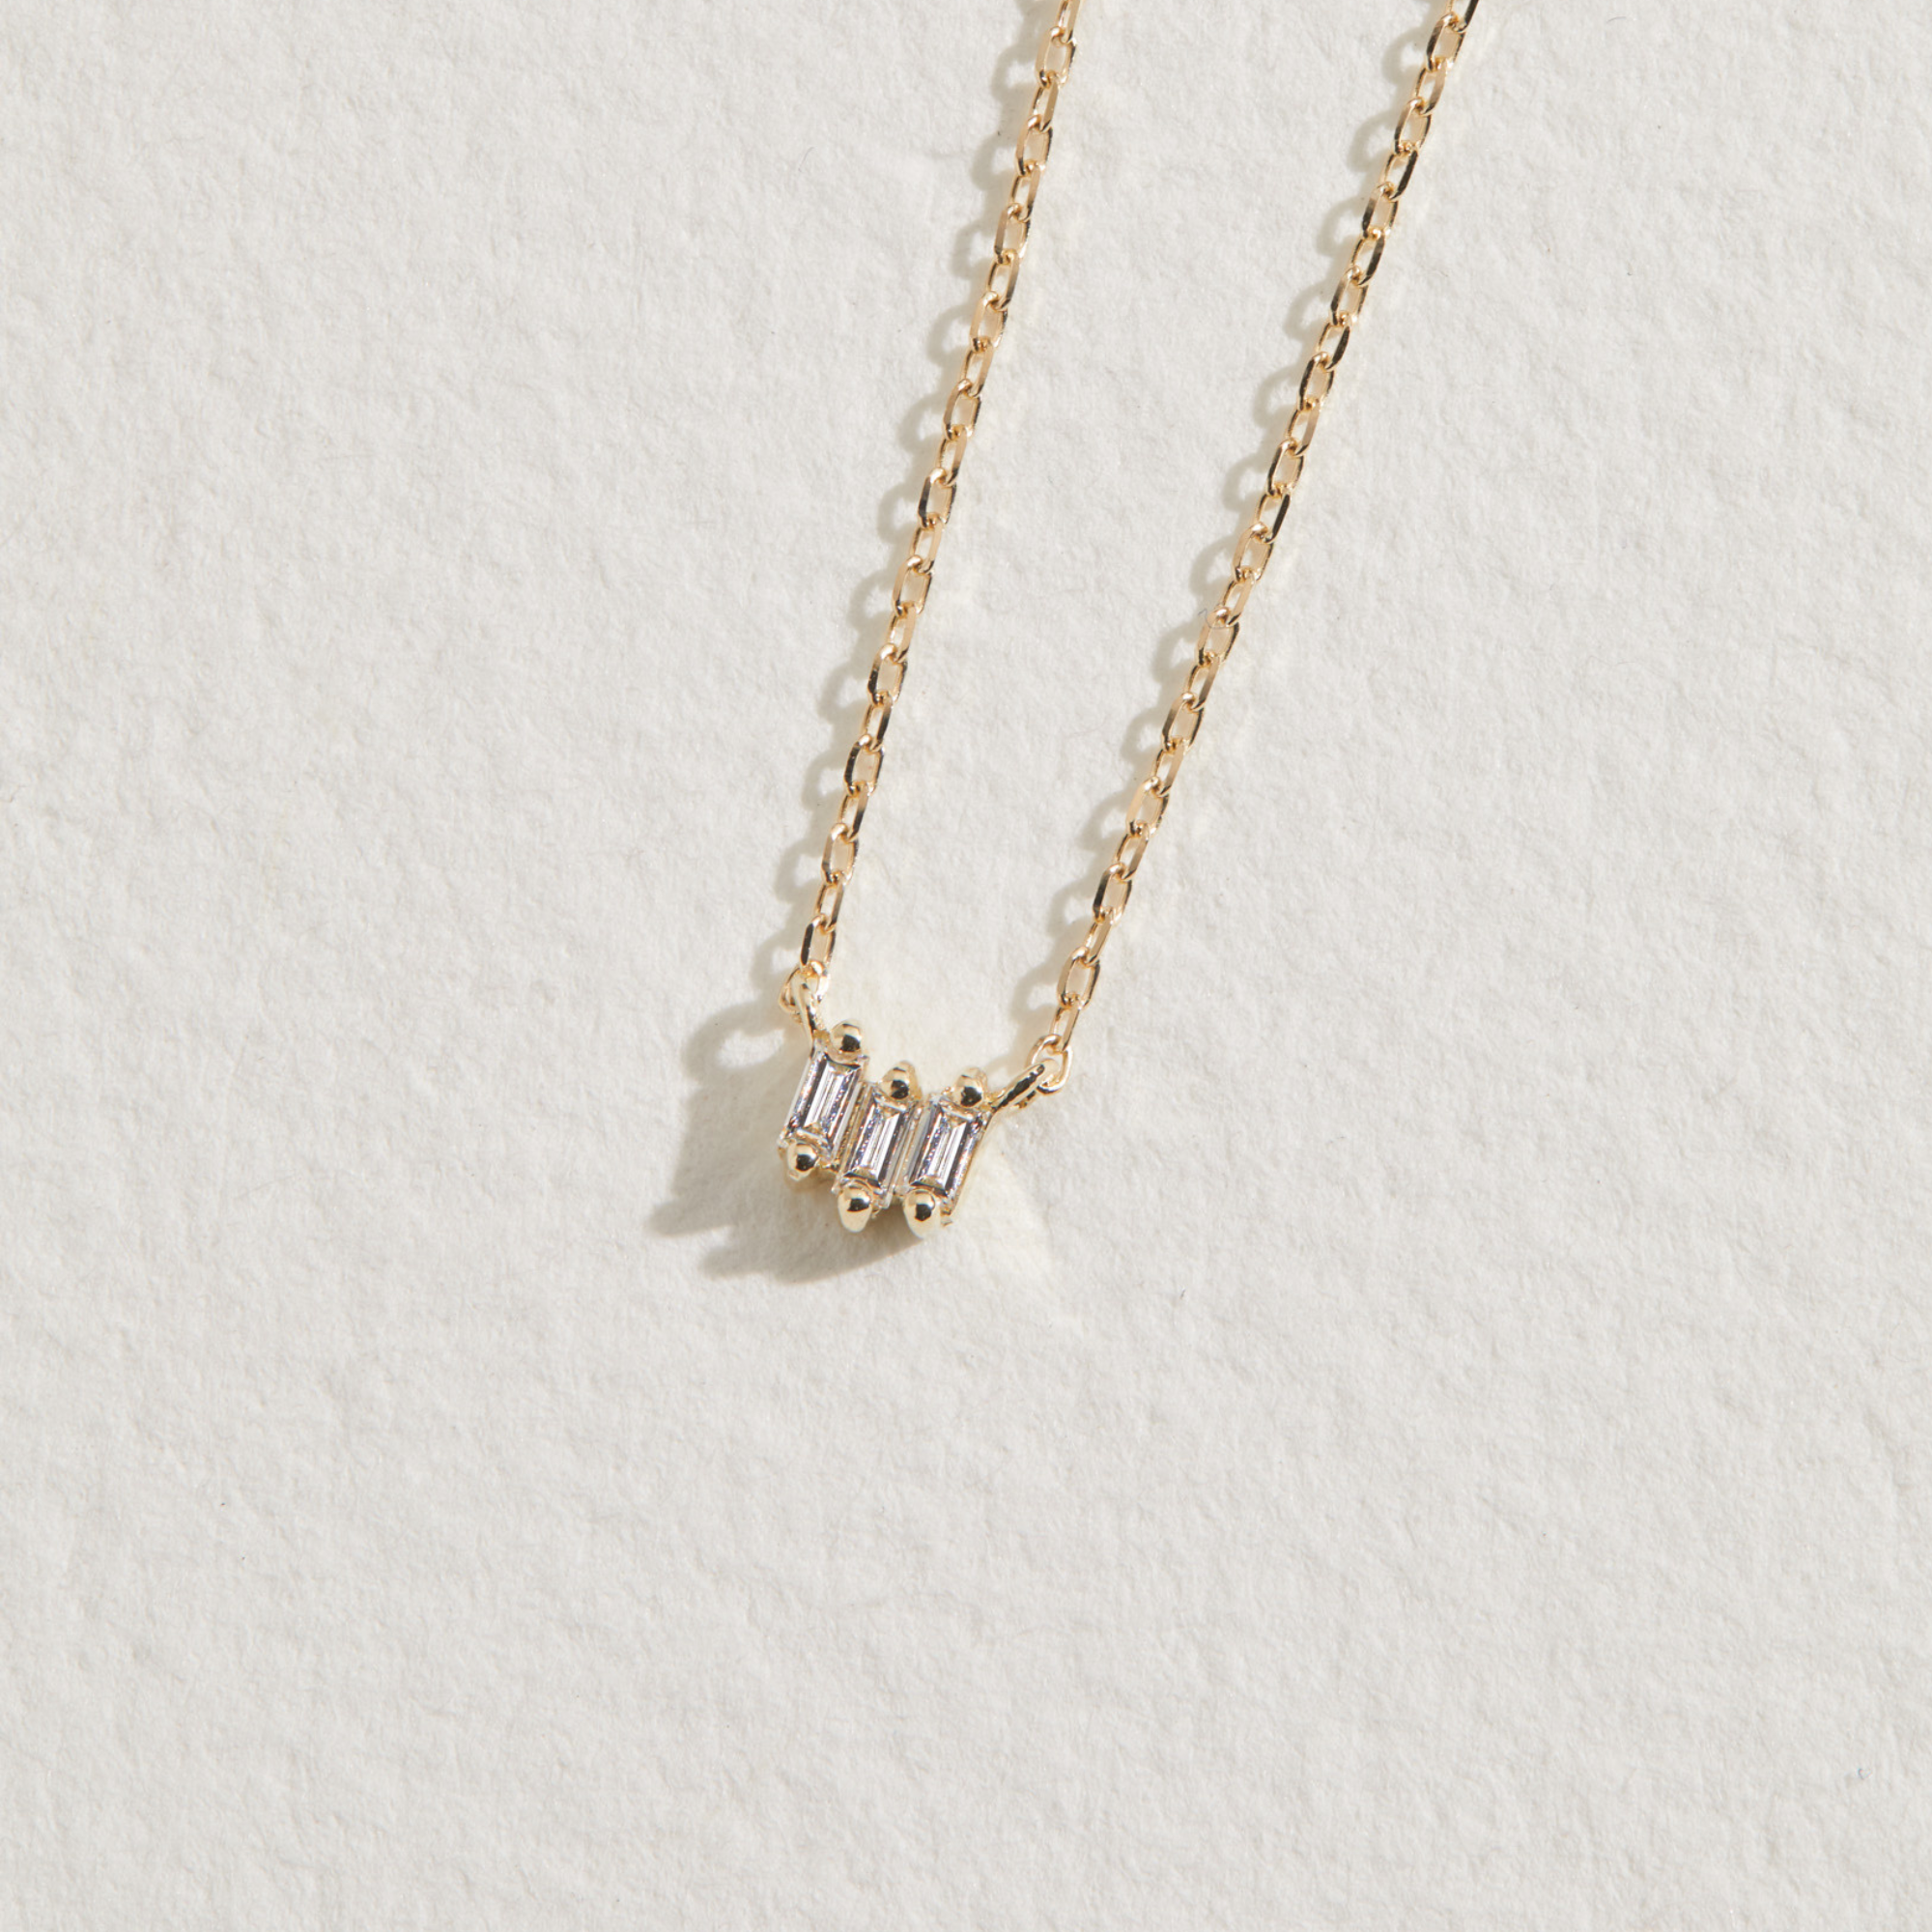 Gold triple baguette diamond necklace on a paper surface